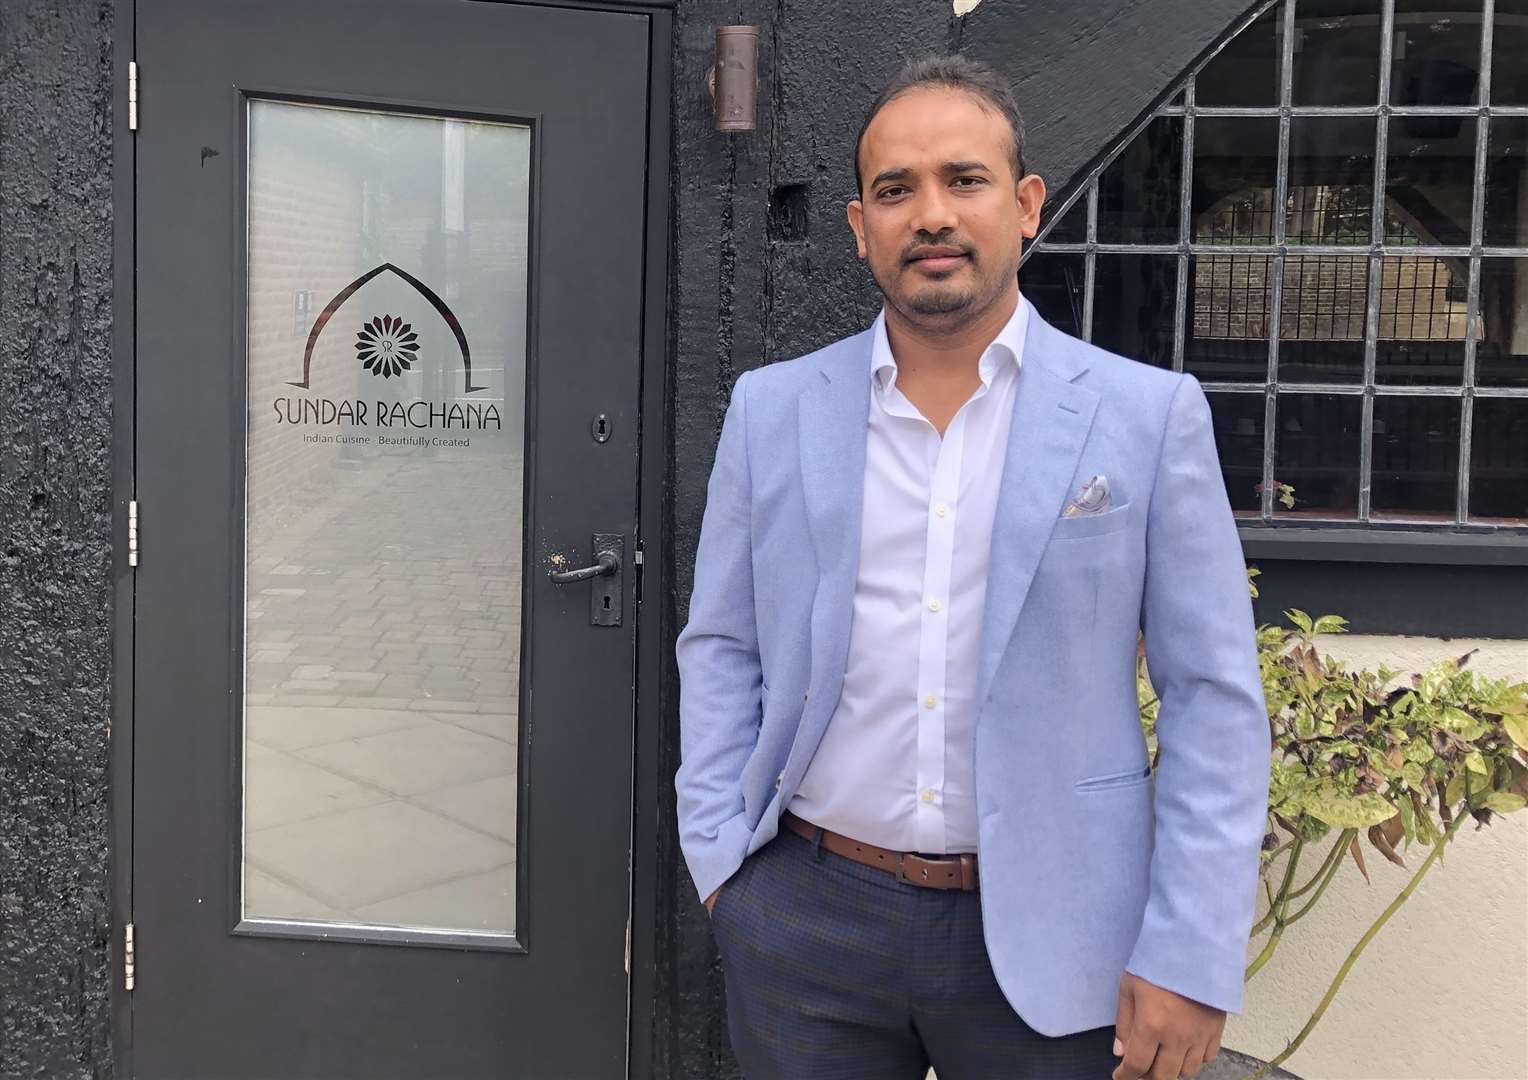 Saif Islam owner of Sundar Rachana, Rainham, has welcomed the price cap